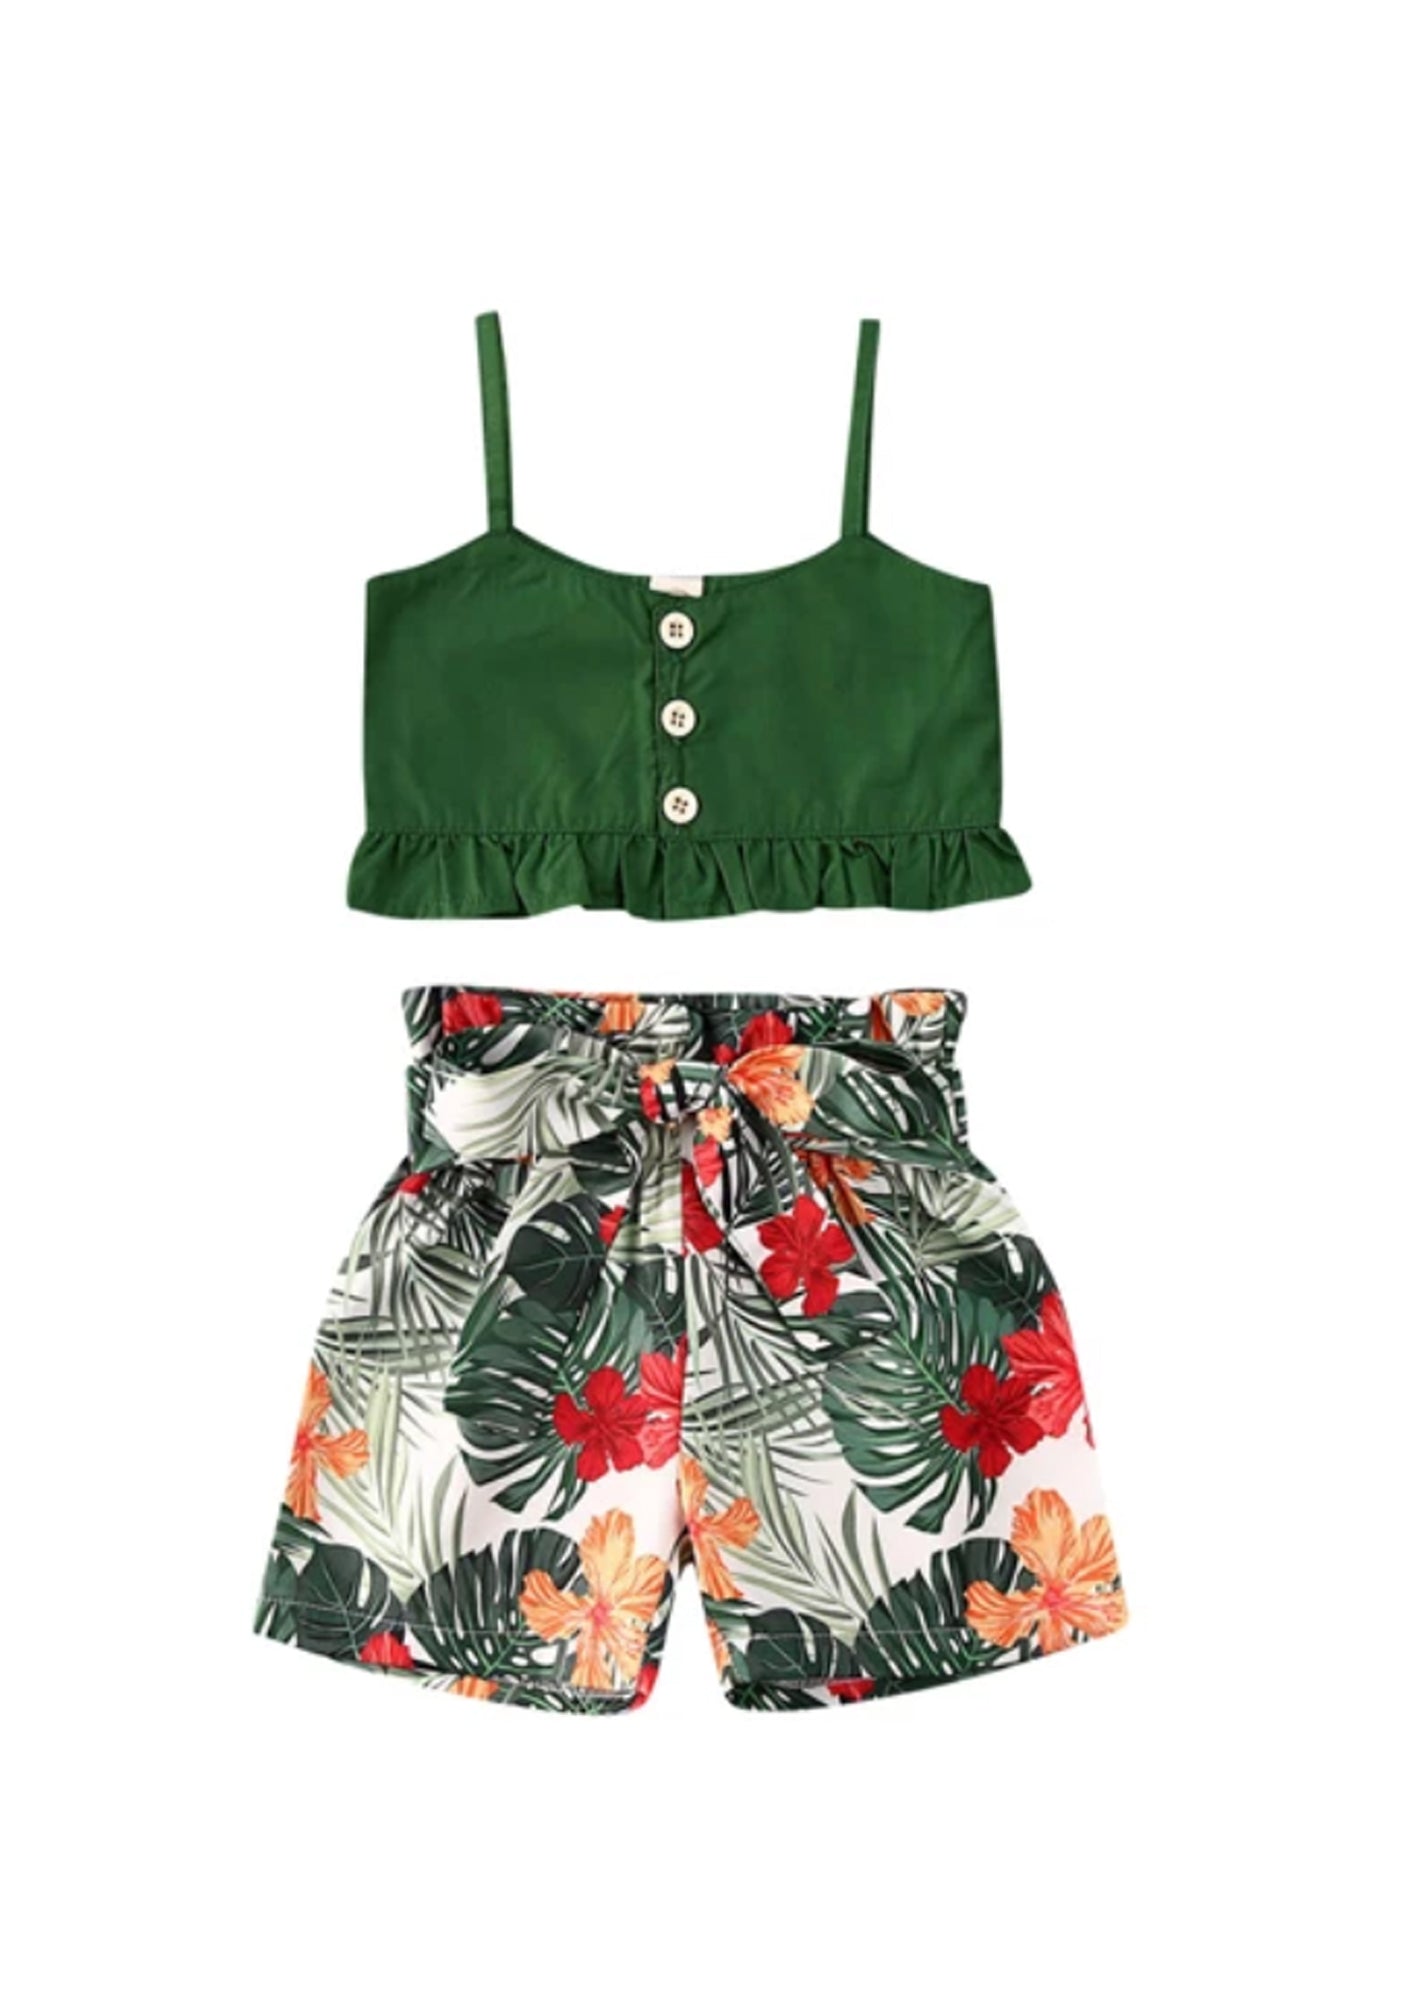 GIRLS - Island Print Green Shorts and Top Set - Hannah Rose Vintage Boutique